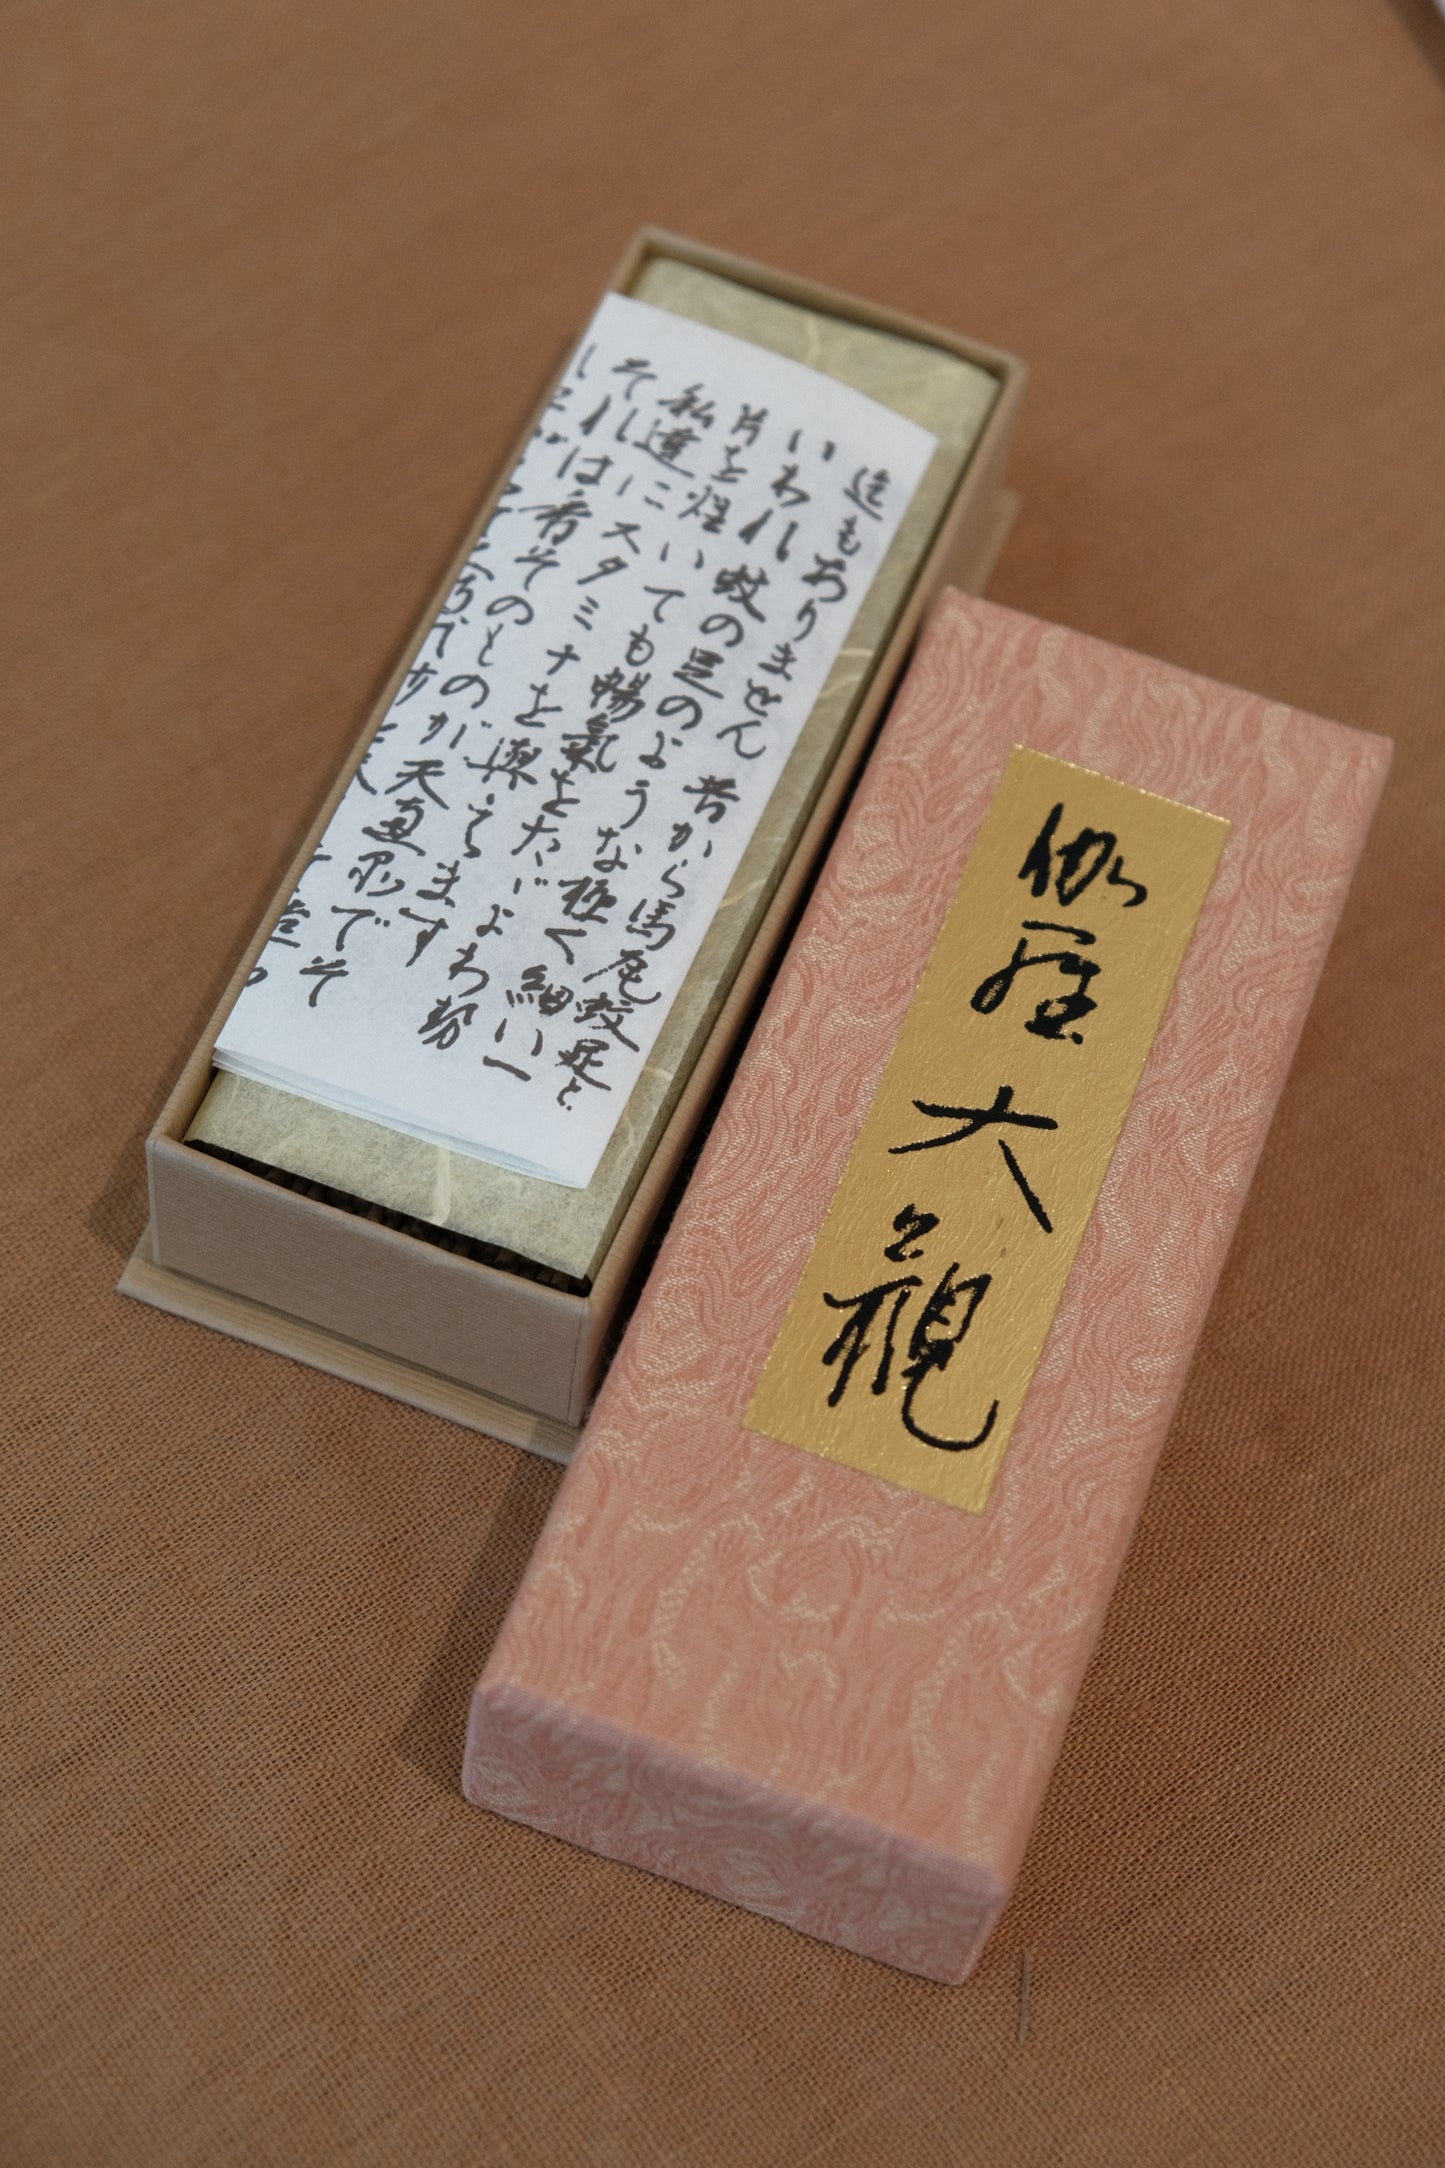 Japan High Quality Premium Agarwood incense